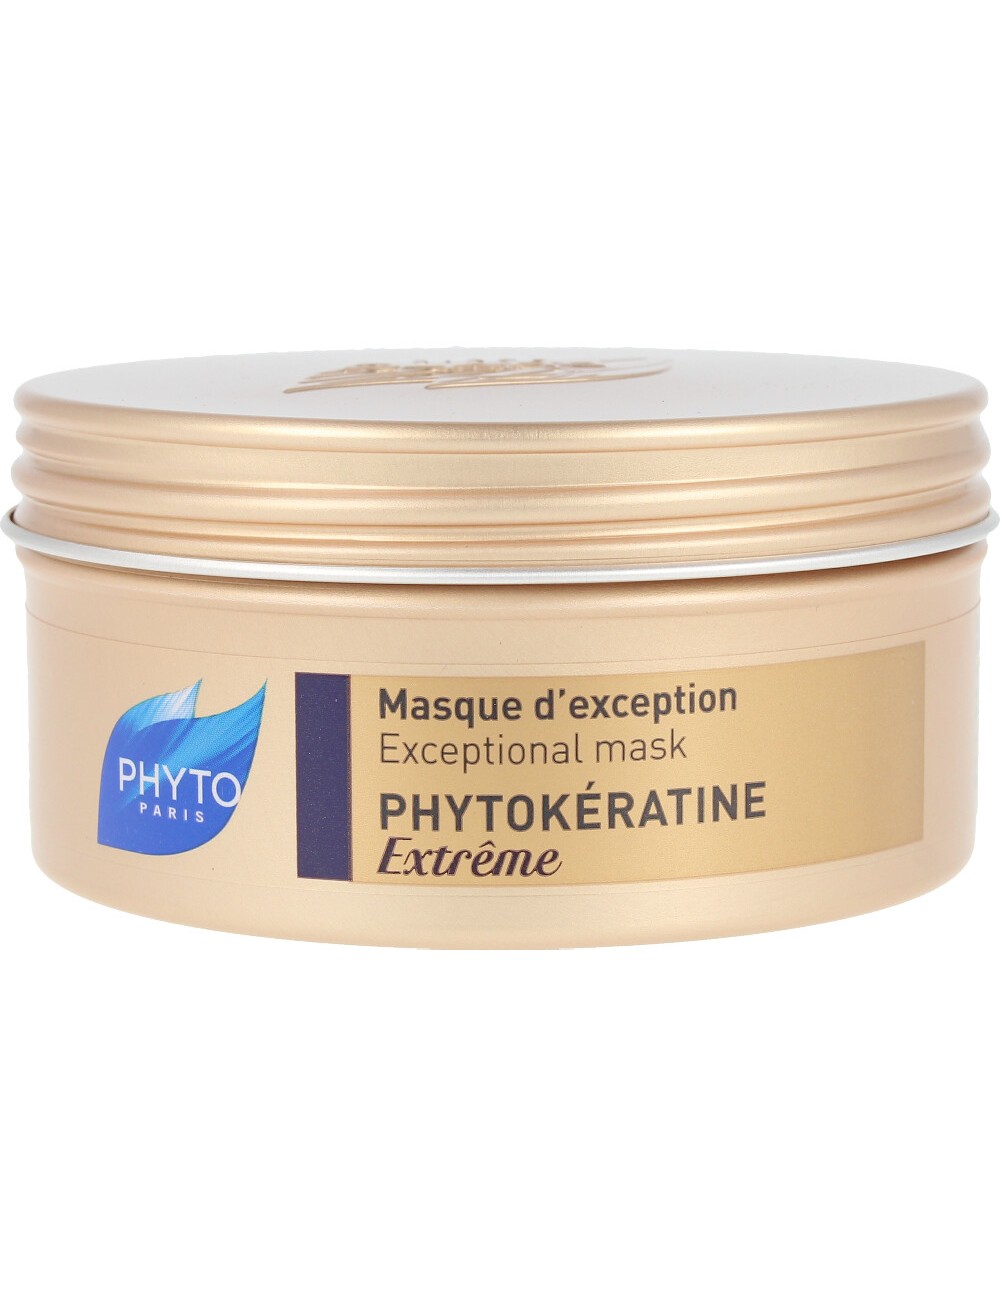 PHYTOKÉRATINE EXTRÊME exceptional mask 200 ml